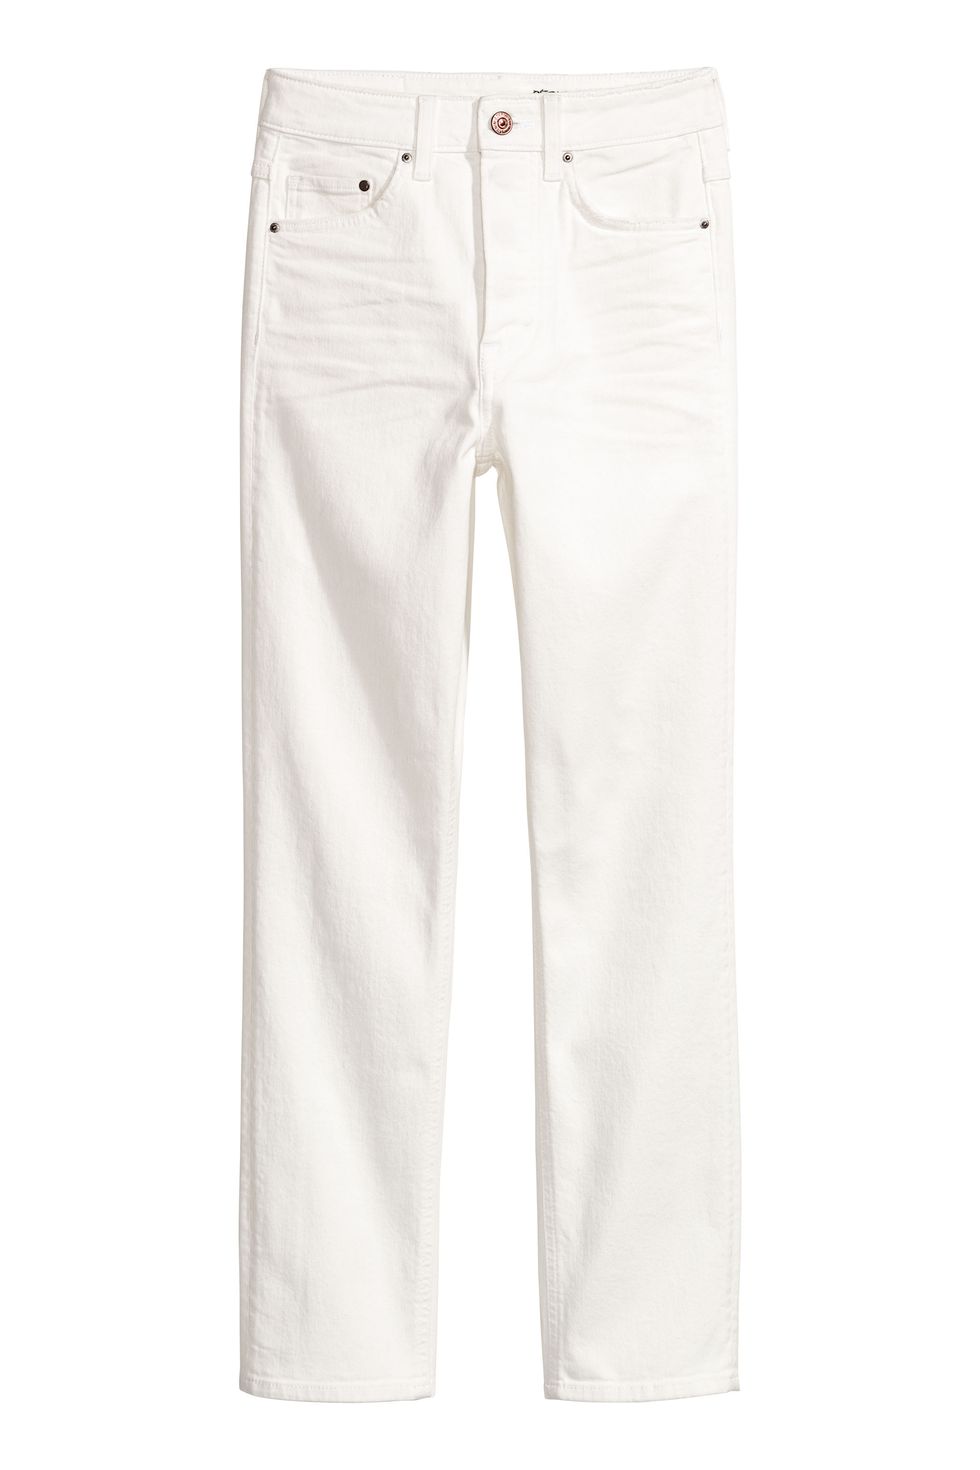 White, Jeans, Clothing, Denim, Pocket, Trousers, Textile, Beige, 